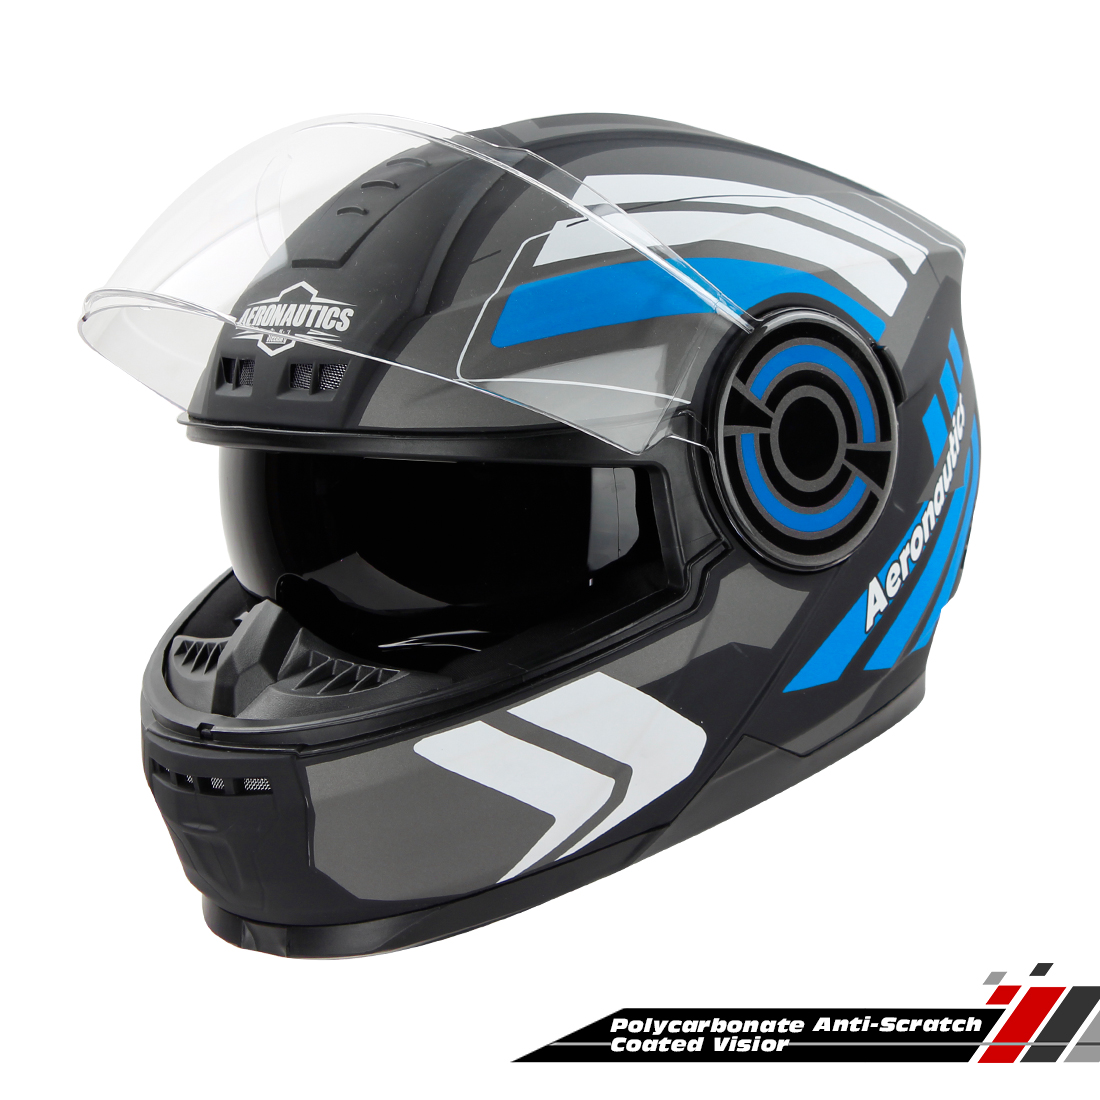 Steelbird SBH-40 Vanguard ISI Certified Full Face Graphic Helmet For Men And Women With Inner Sun Shield (Matt Black Blue)